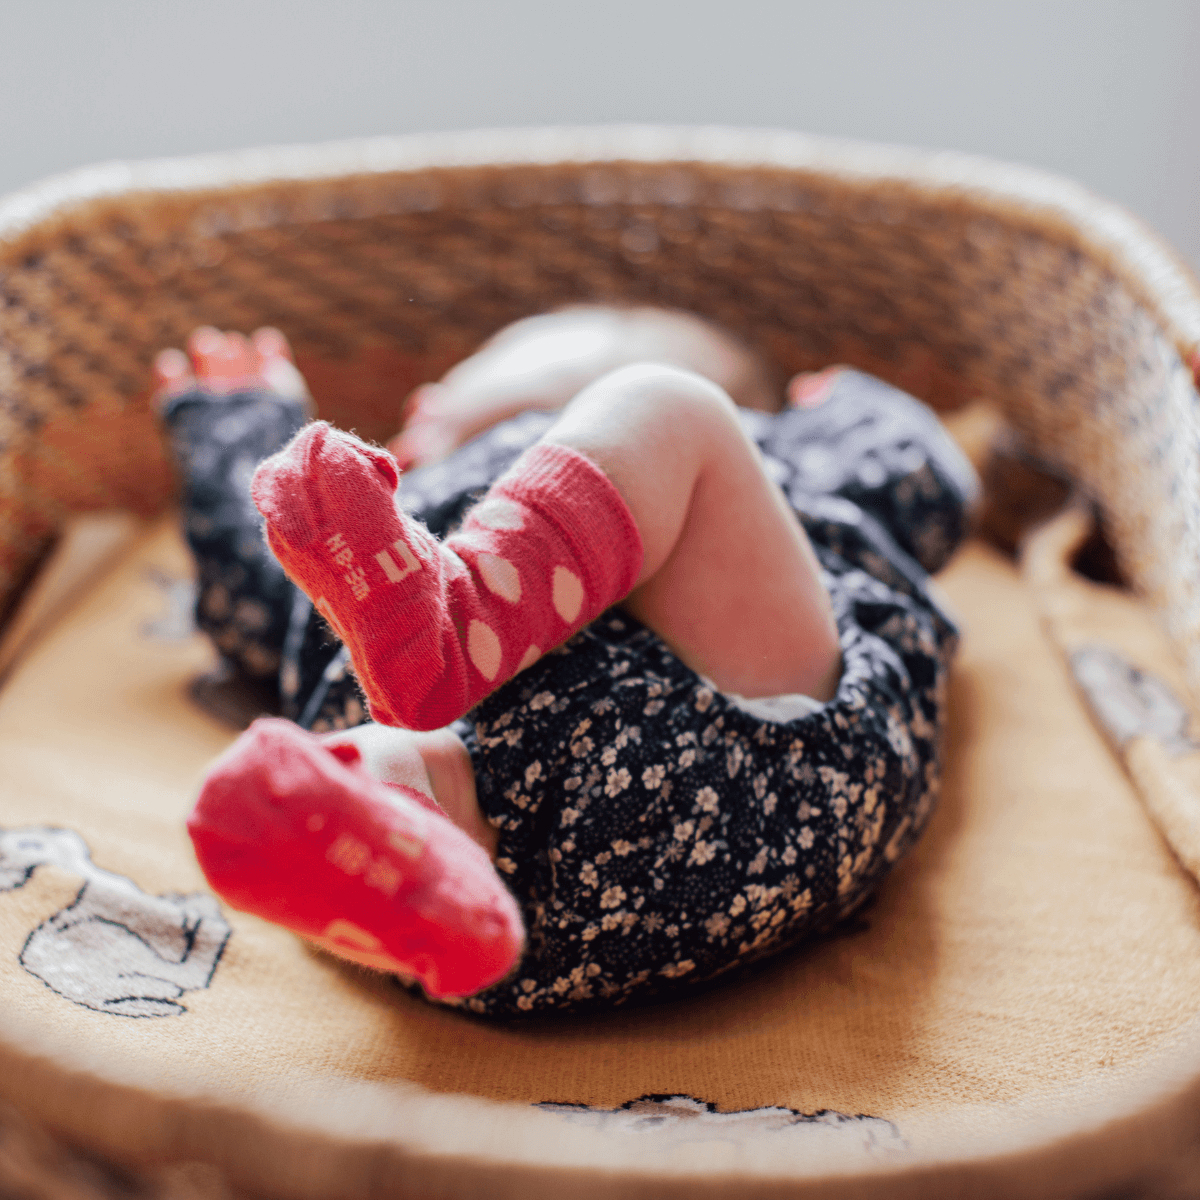 merino wool baby socks pink and pink spots